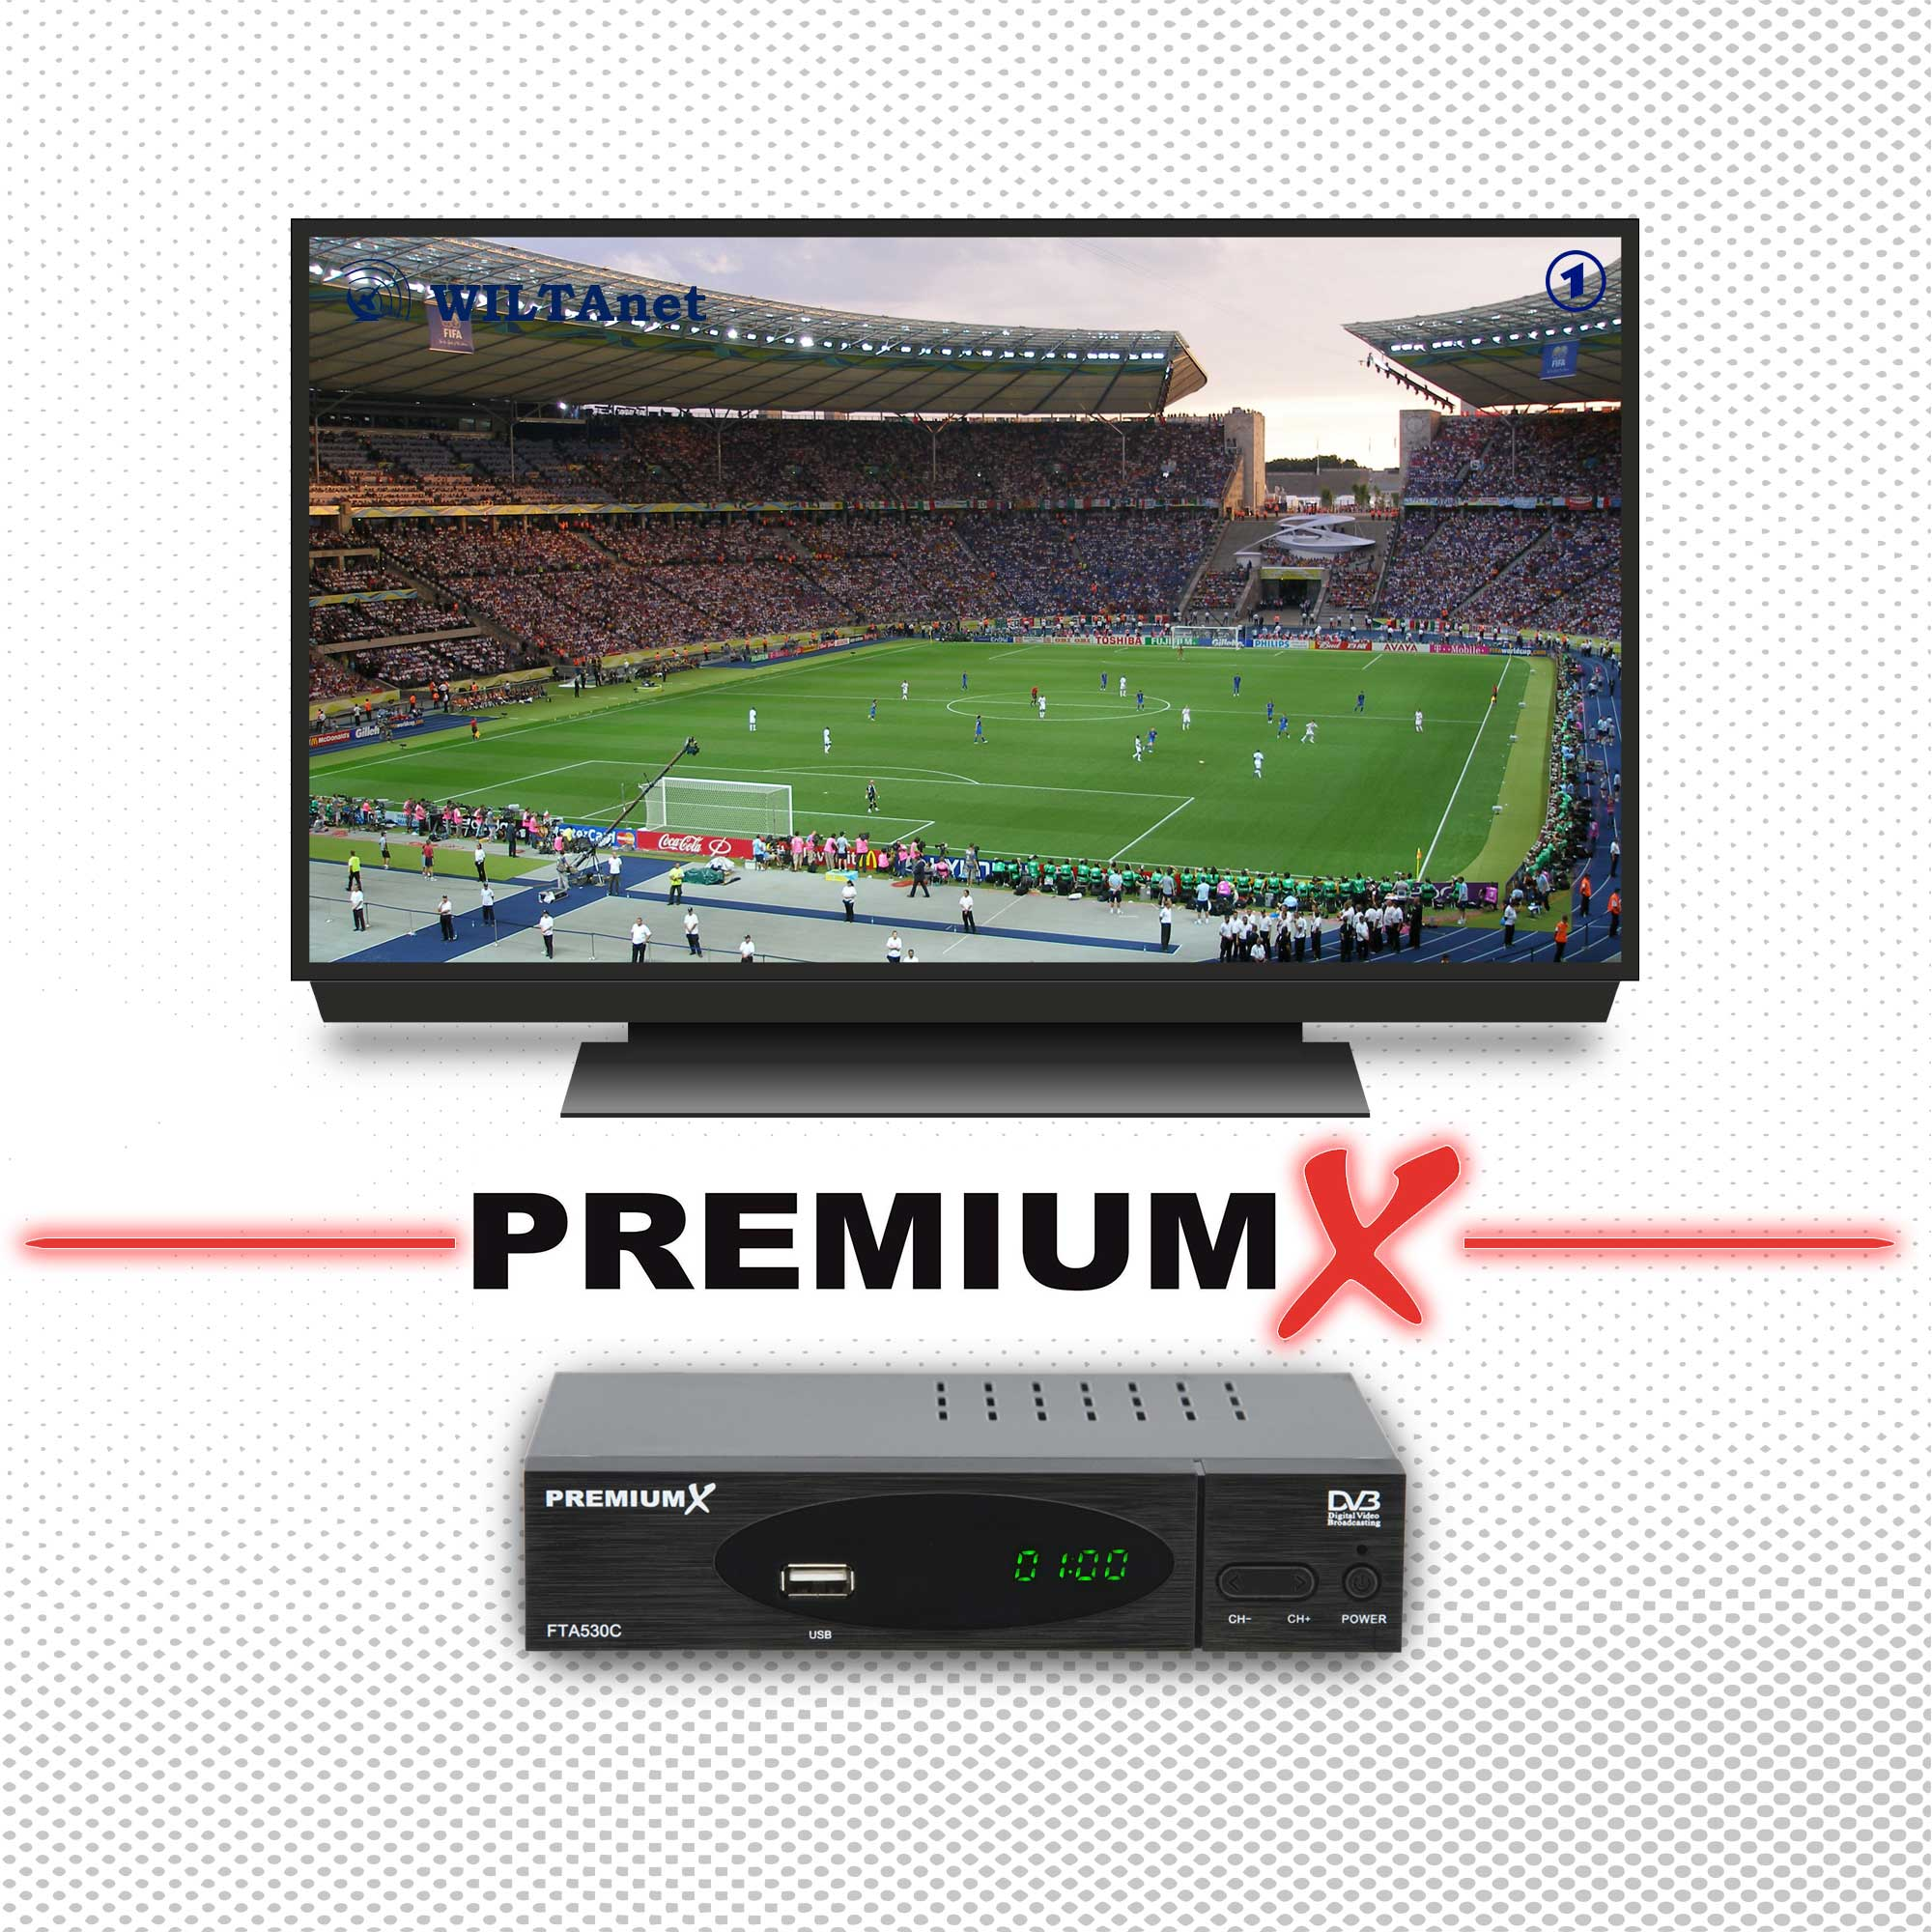 SCART USB HD FTA HDMI PREMIUMX FullHD Kabel Digital DVB-C Kabel 530C (Schwarz) Receiver Receiver